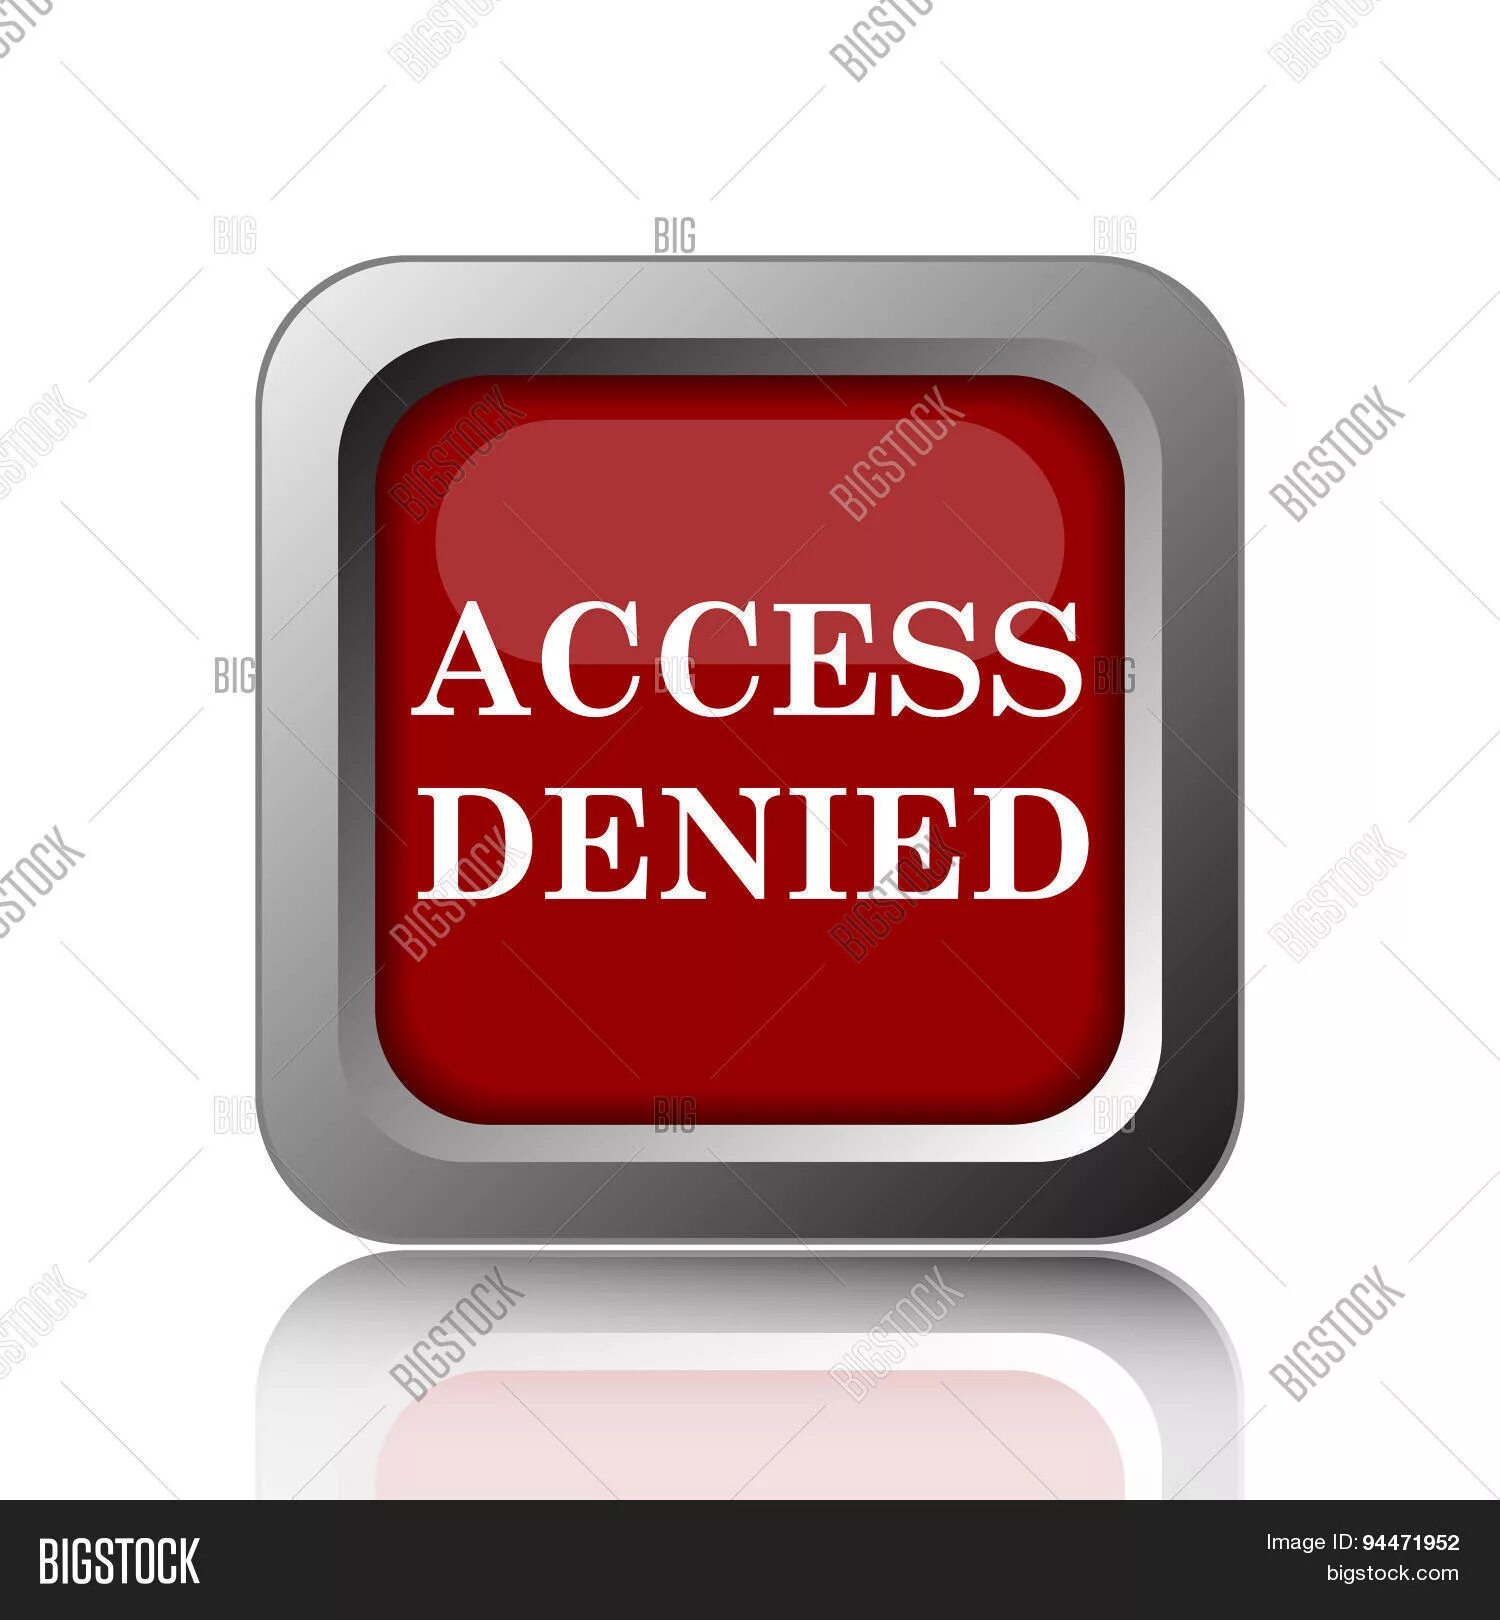 Pull access denied for. Access denied картинки. Access denied гиф. Access denied арт. Заставка на телефон access denied.